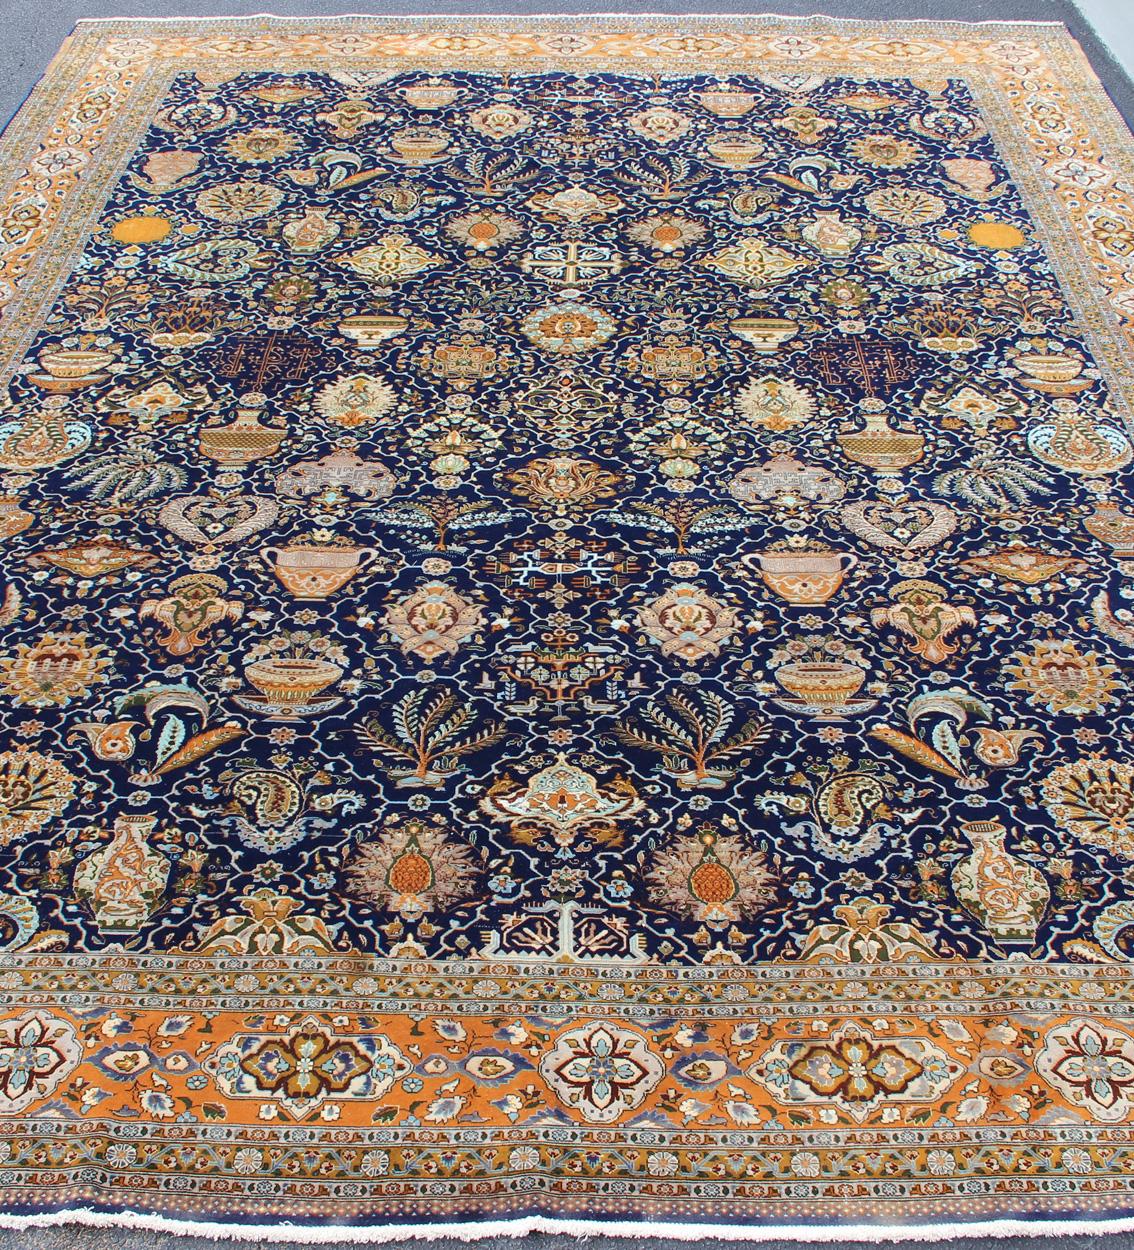 Fine Weave Persian Antique Tabriz Carpet with Intricate Design in Blue Color For Sale 1